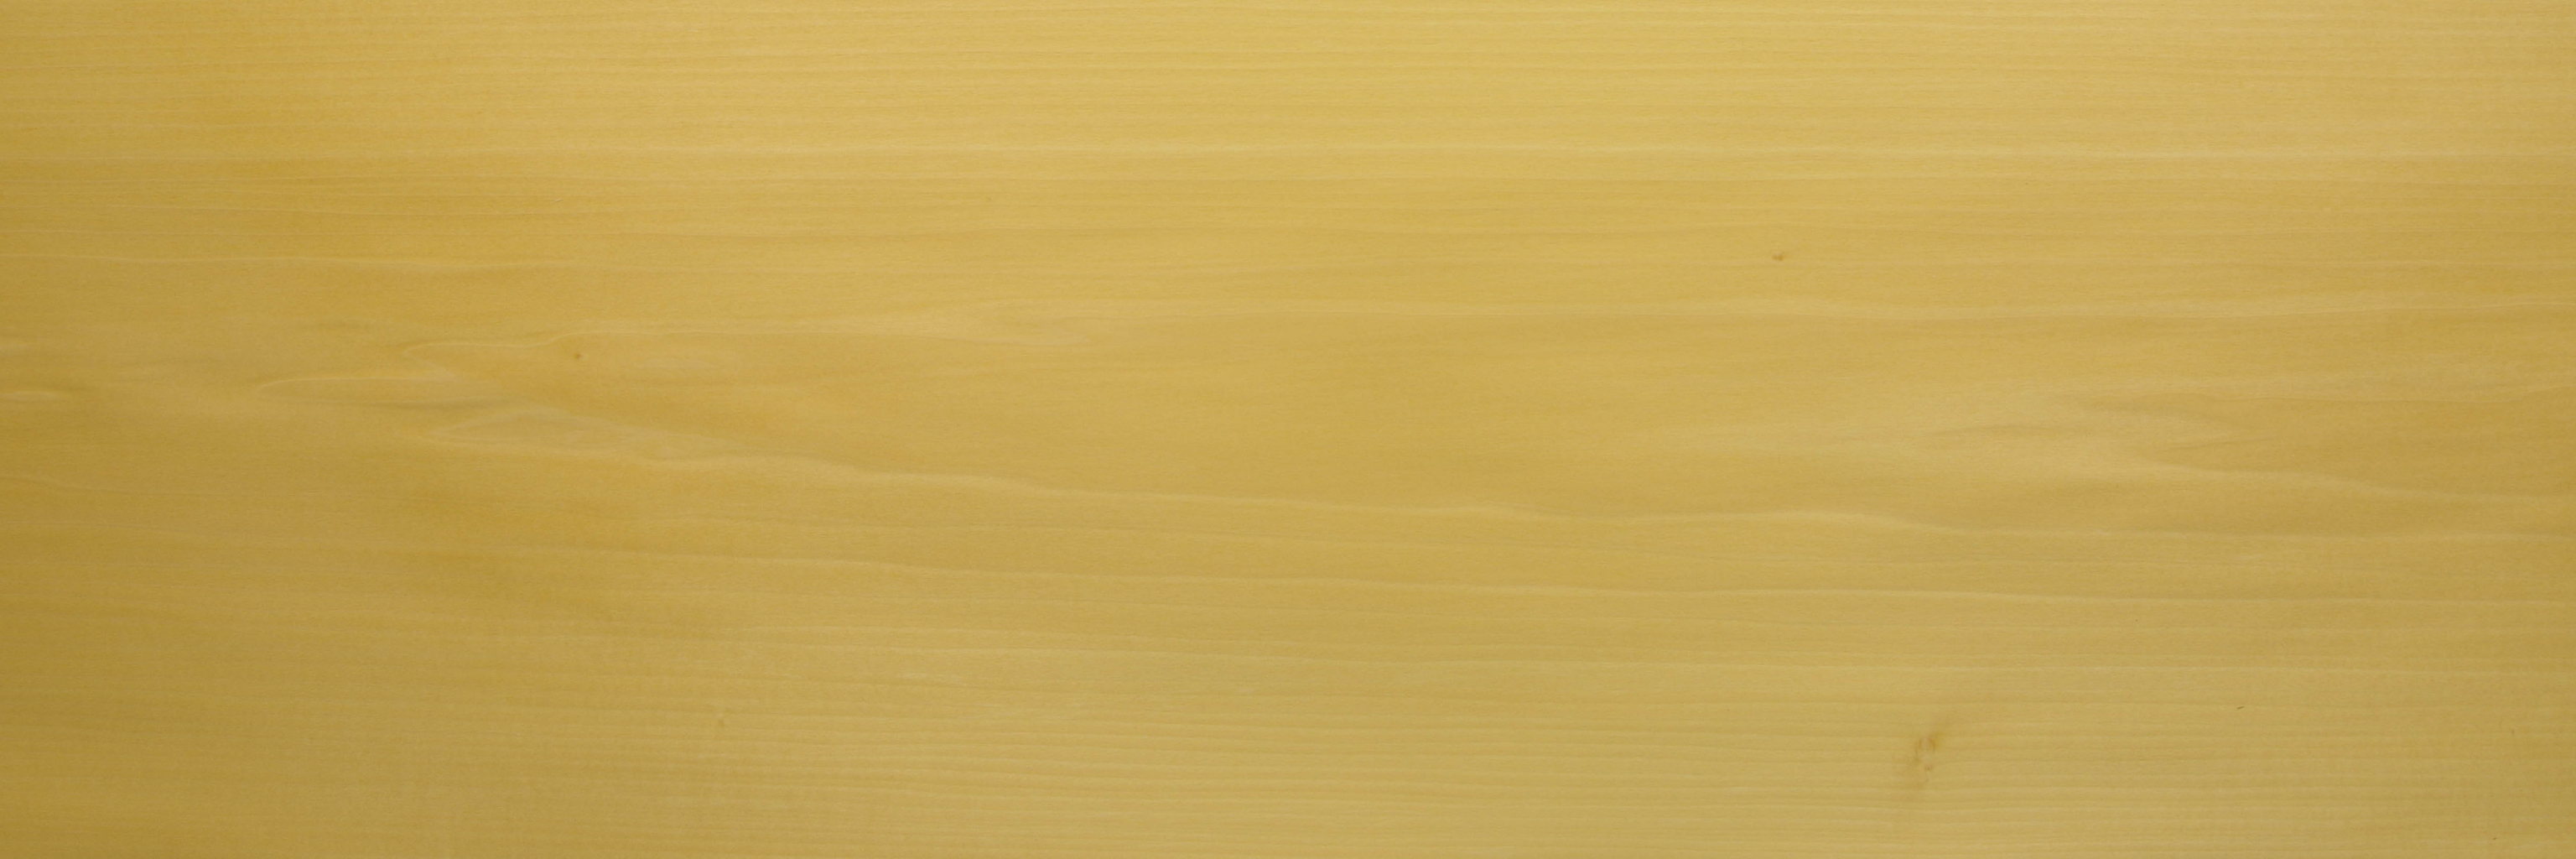 0.6mm Tulpenbaum gelb gefärbtes Furnier 0.37m² N 1 105 35